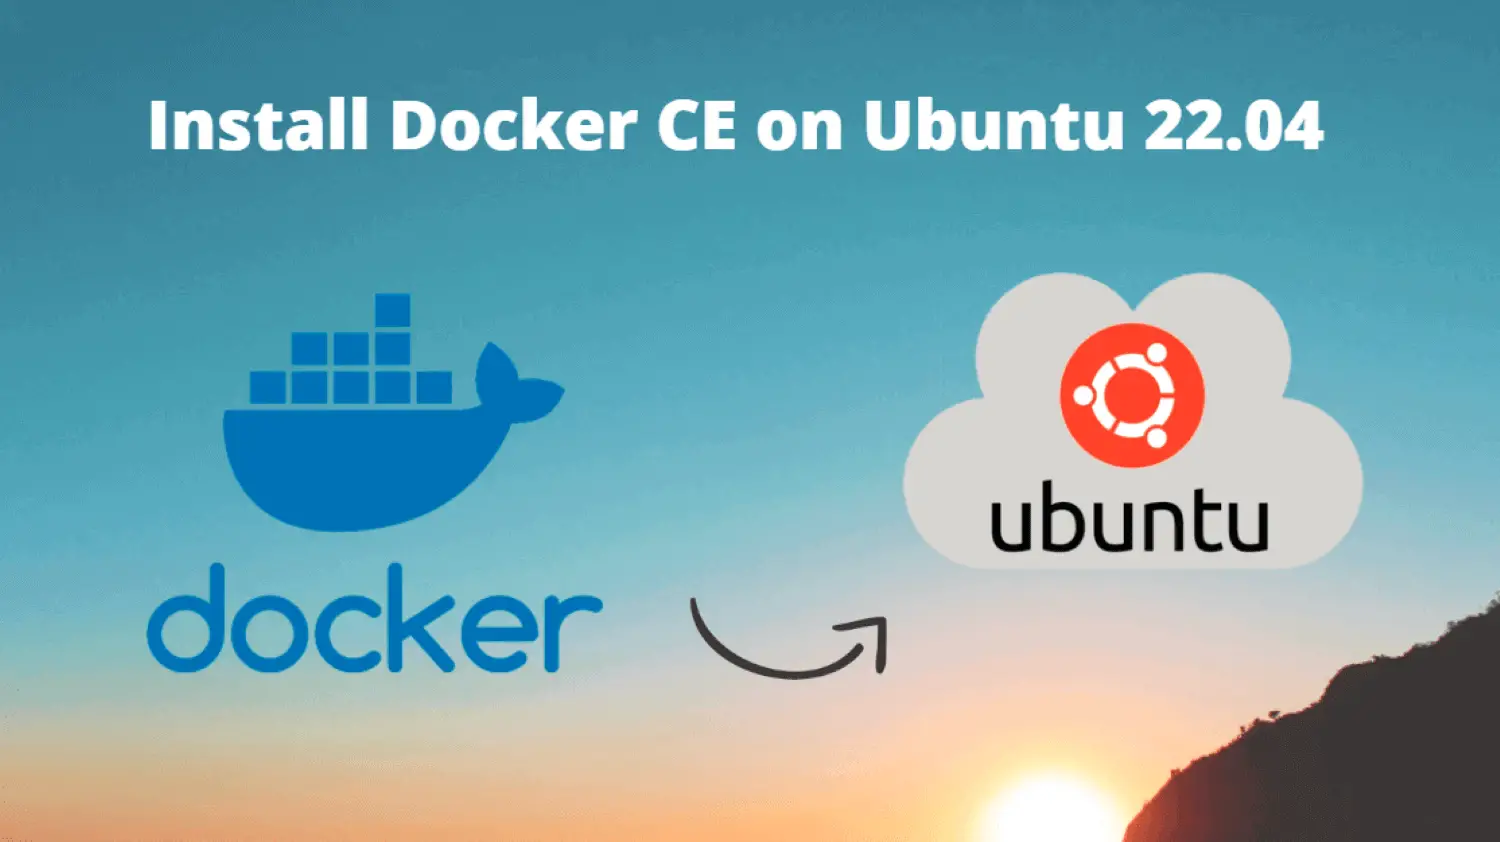 Install Docker CE on Ubuntu 22.04